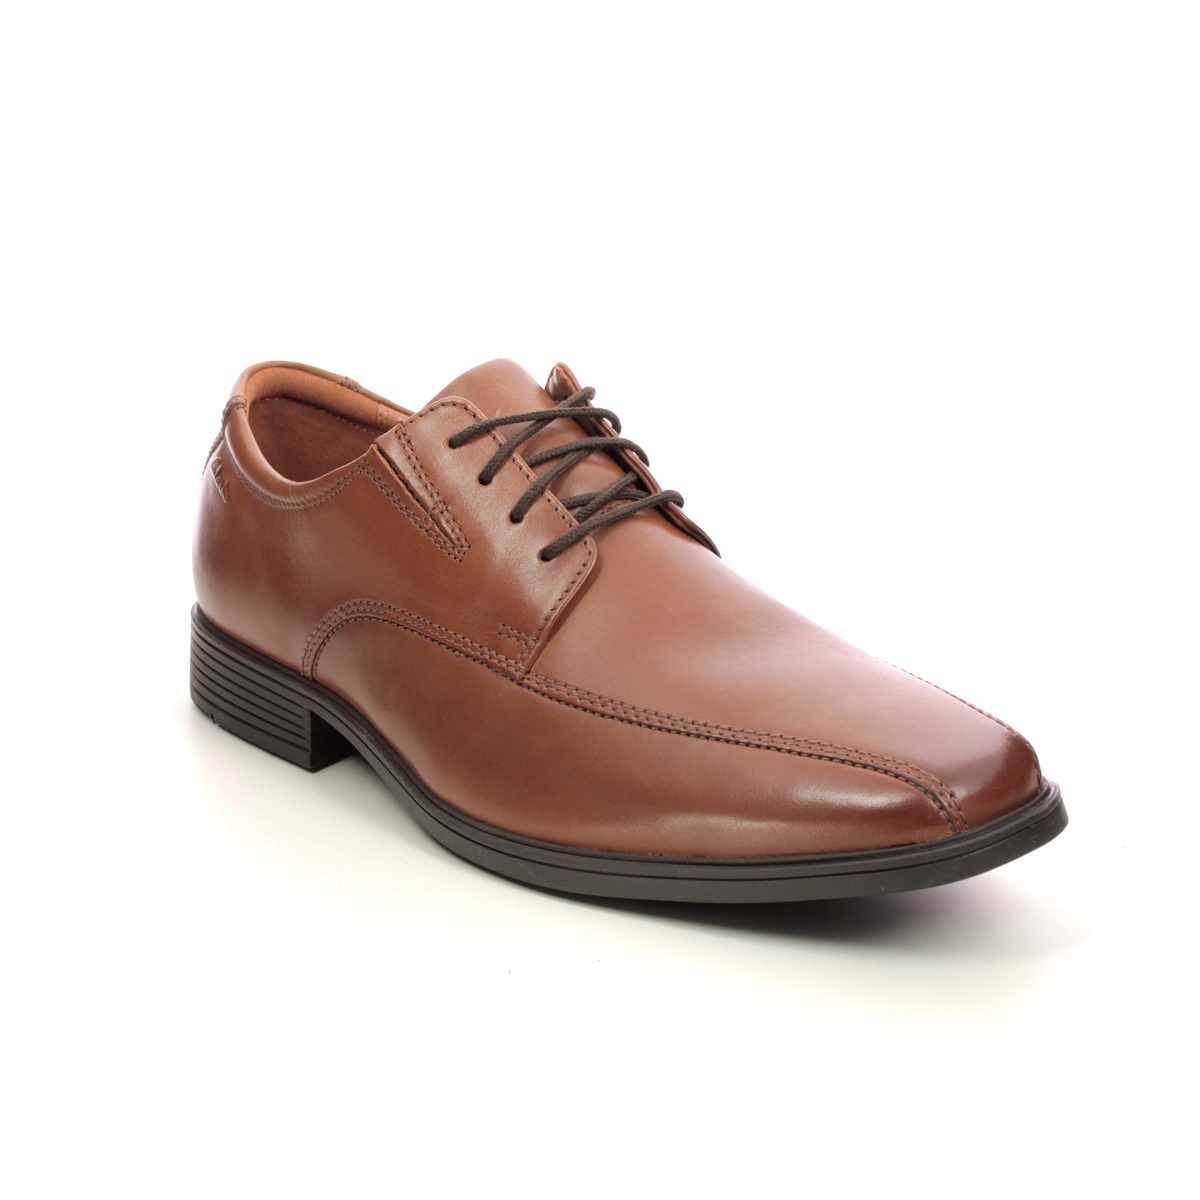 Clarks Tilden Walk Dark Tan Mens Formal Shoes 300958H In Size 6 In Plain Dark Tan H Width Fitting Extra Wide